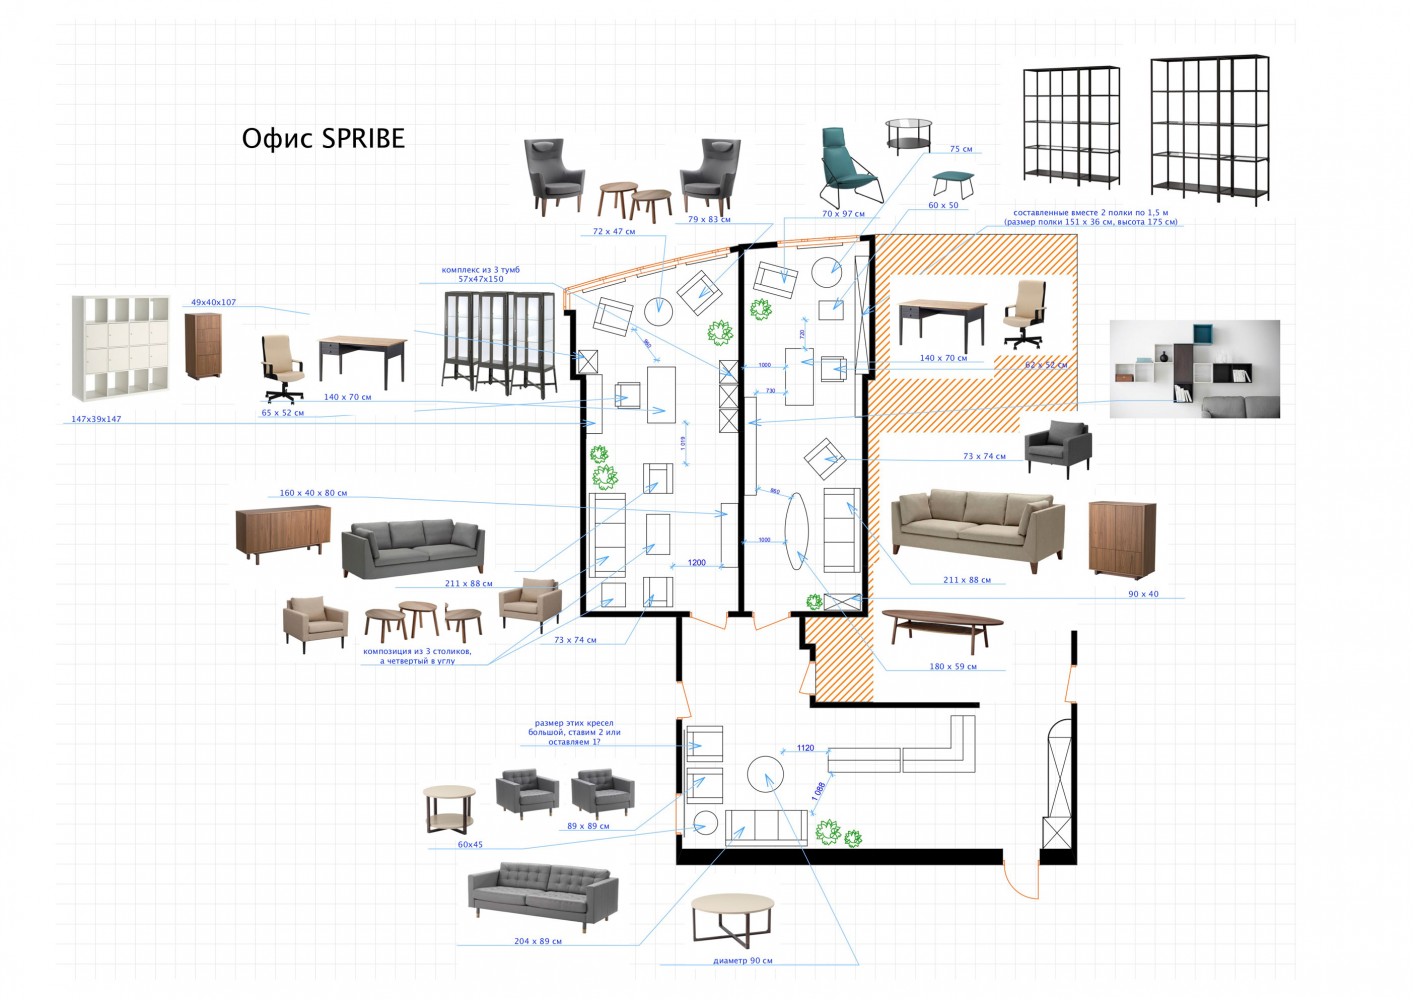 Комплектація офісу, план у дизайн-проект та комплектація офісу меблями ІКЕА — дизайнер Сазонова Іра